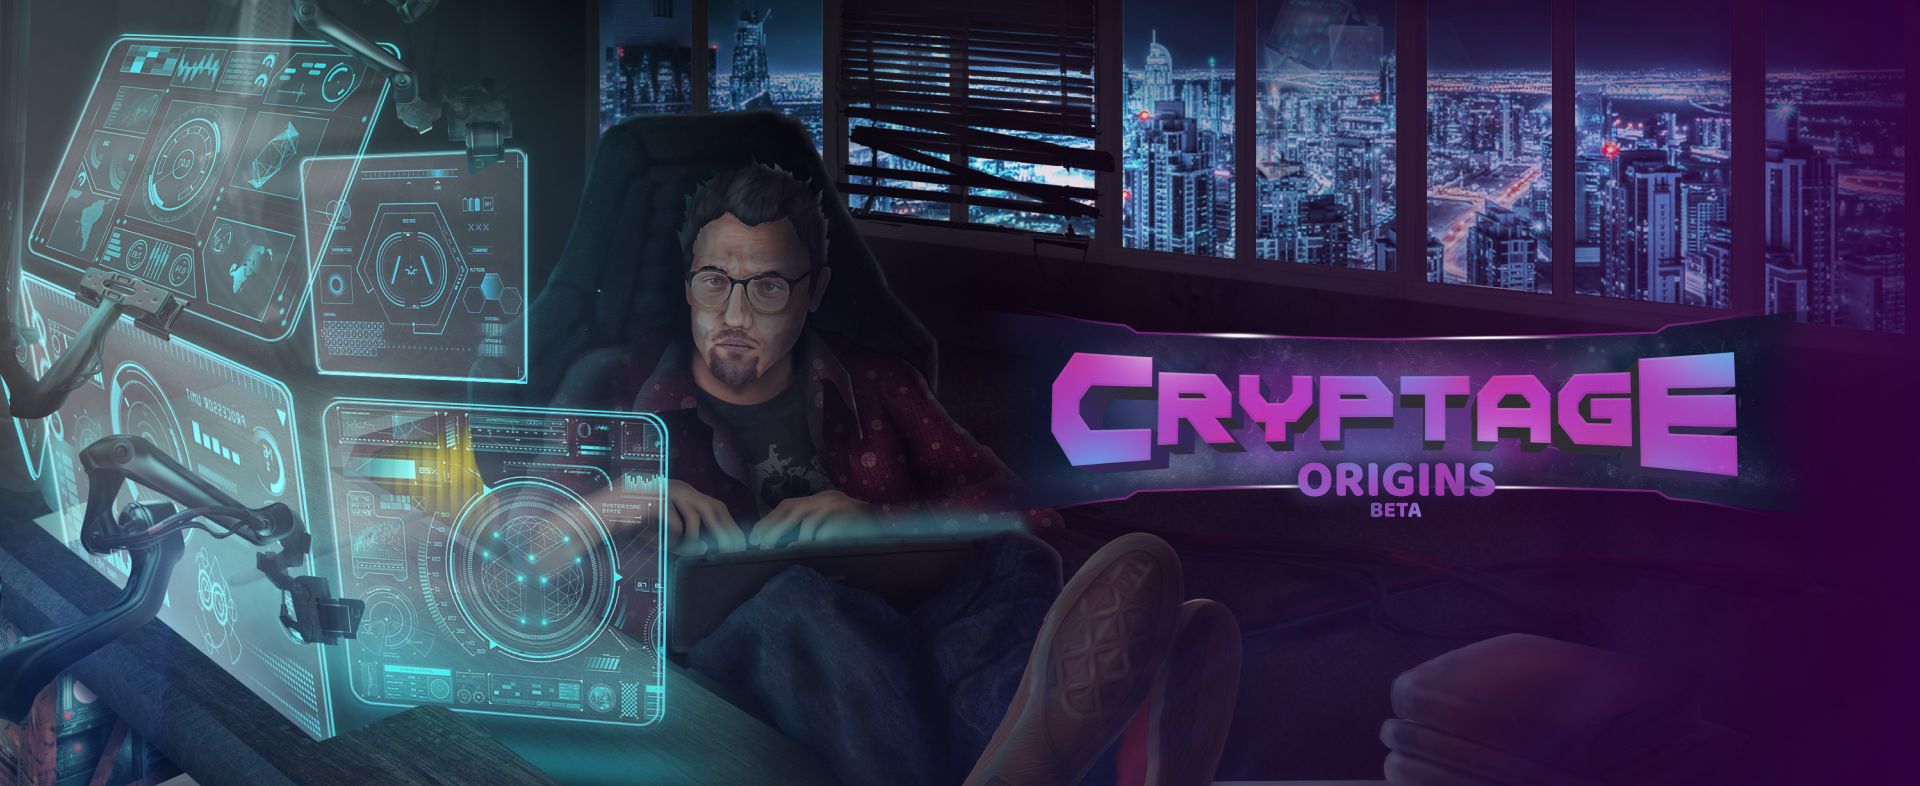 cryptage origins cover illustration